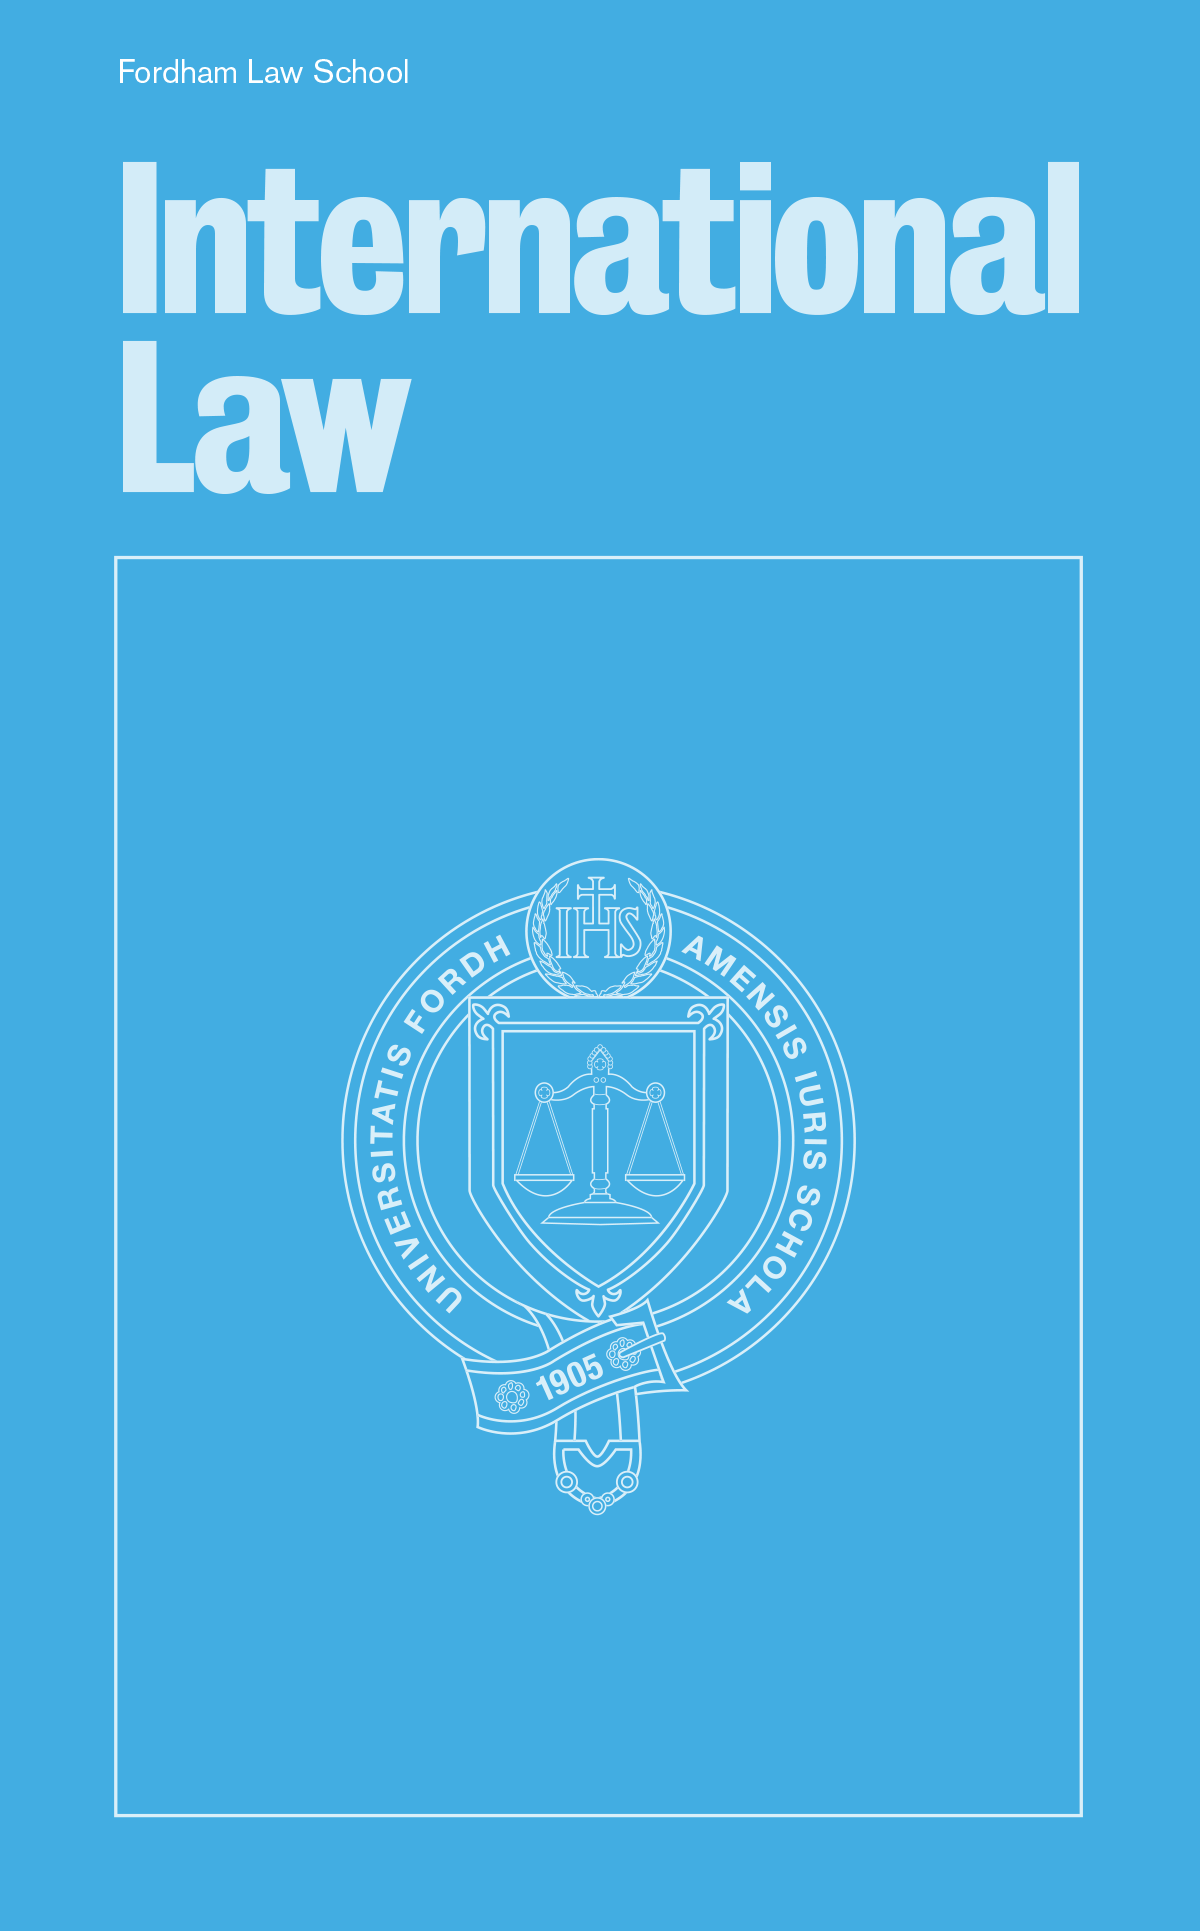 International Law brochure cover